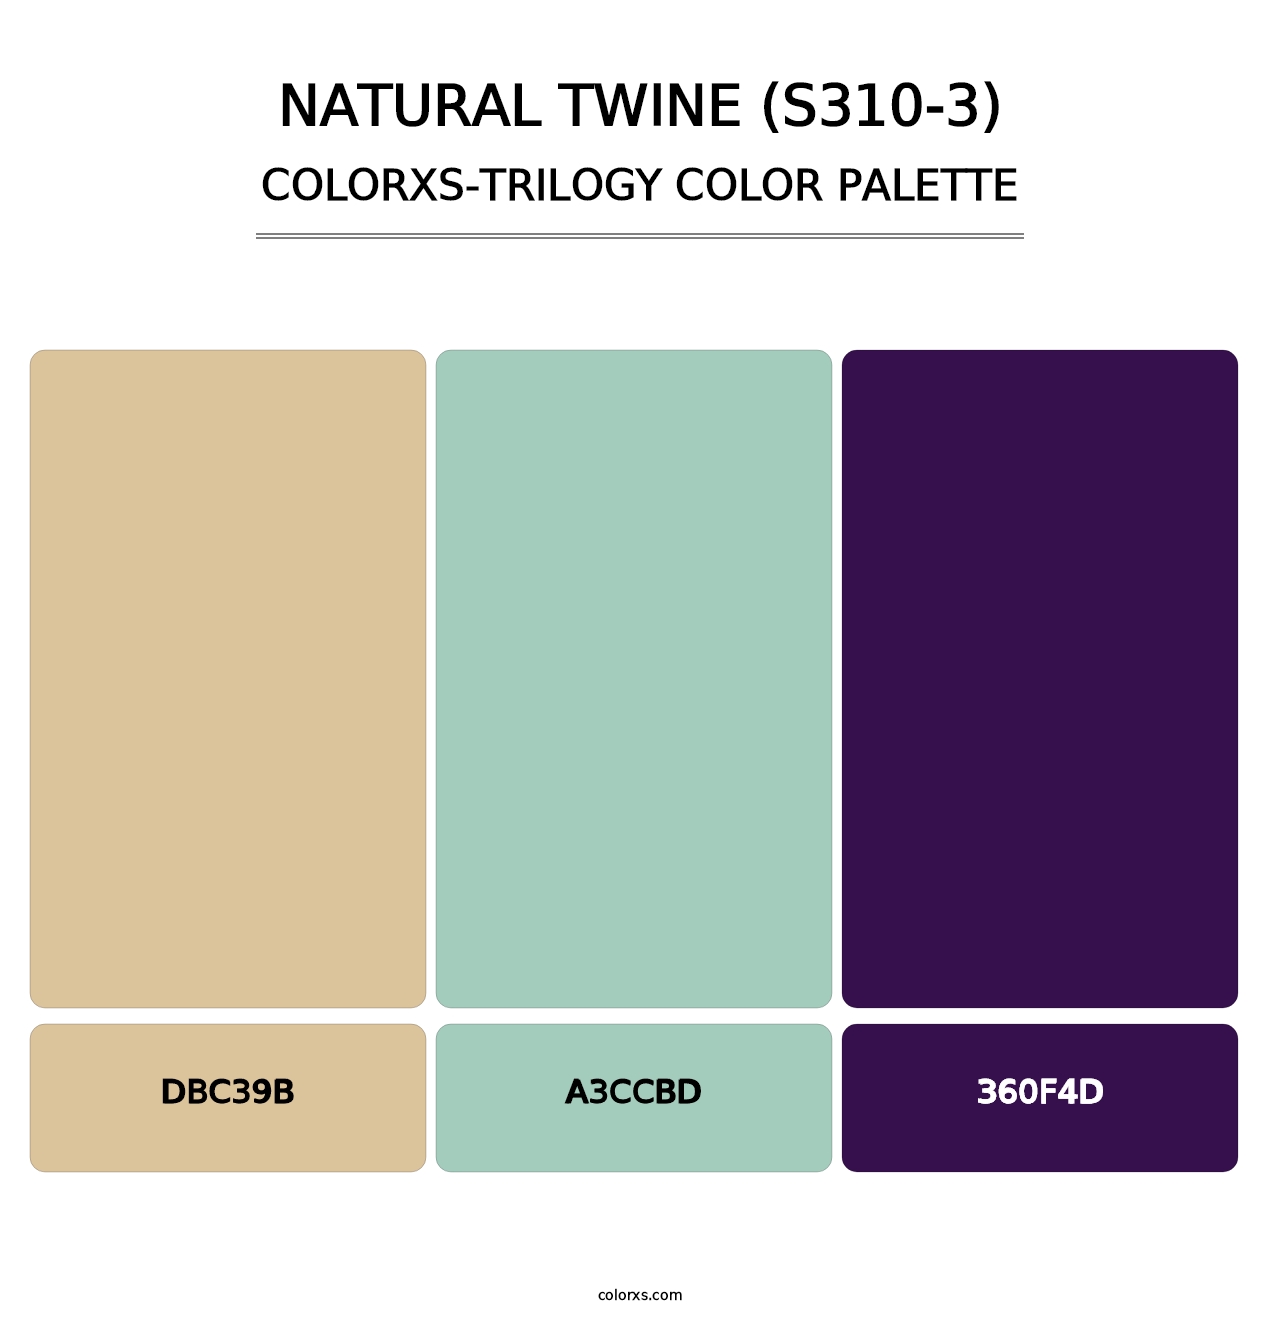 Natural Twine (S310-3) - Colorxs Trilogy Palette